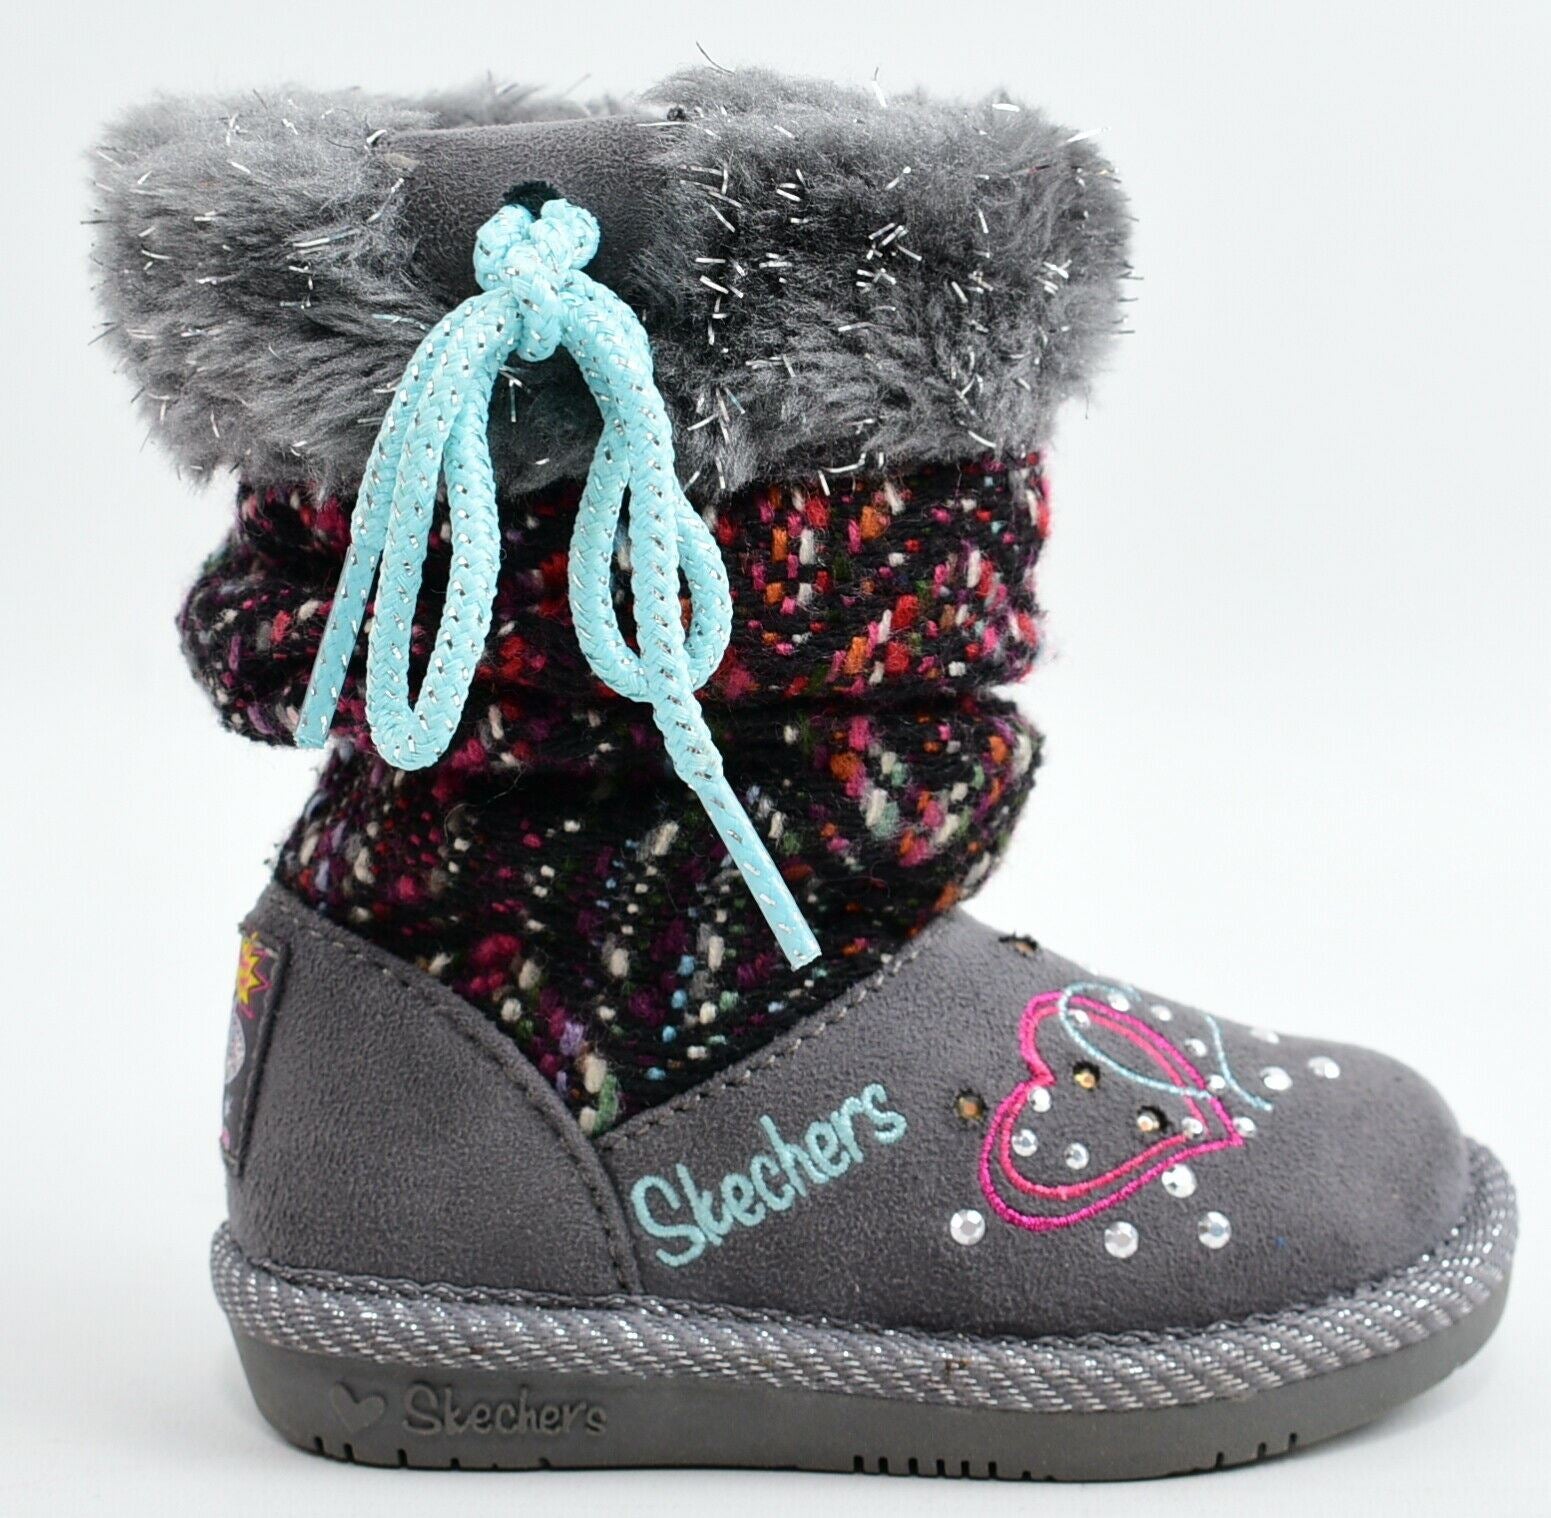 SKECHERS Twinkle Toes Girls' Light Up Boots, Grey/Multi, infant UK 5 / EU 22